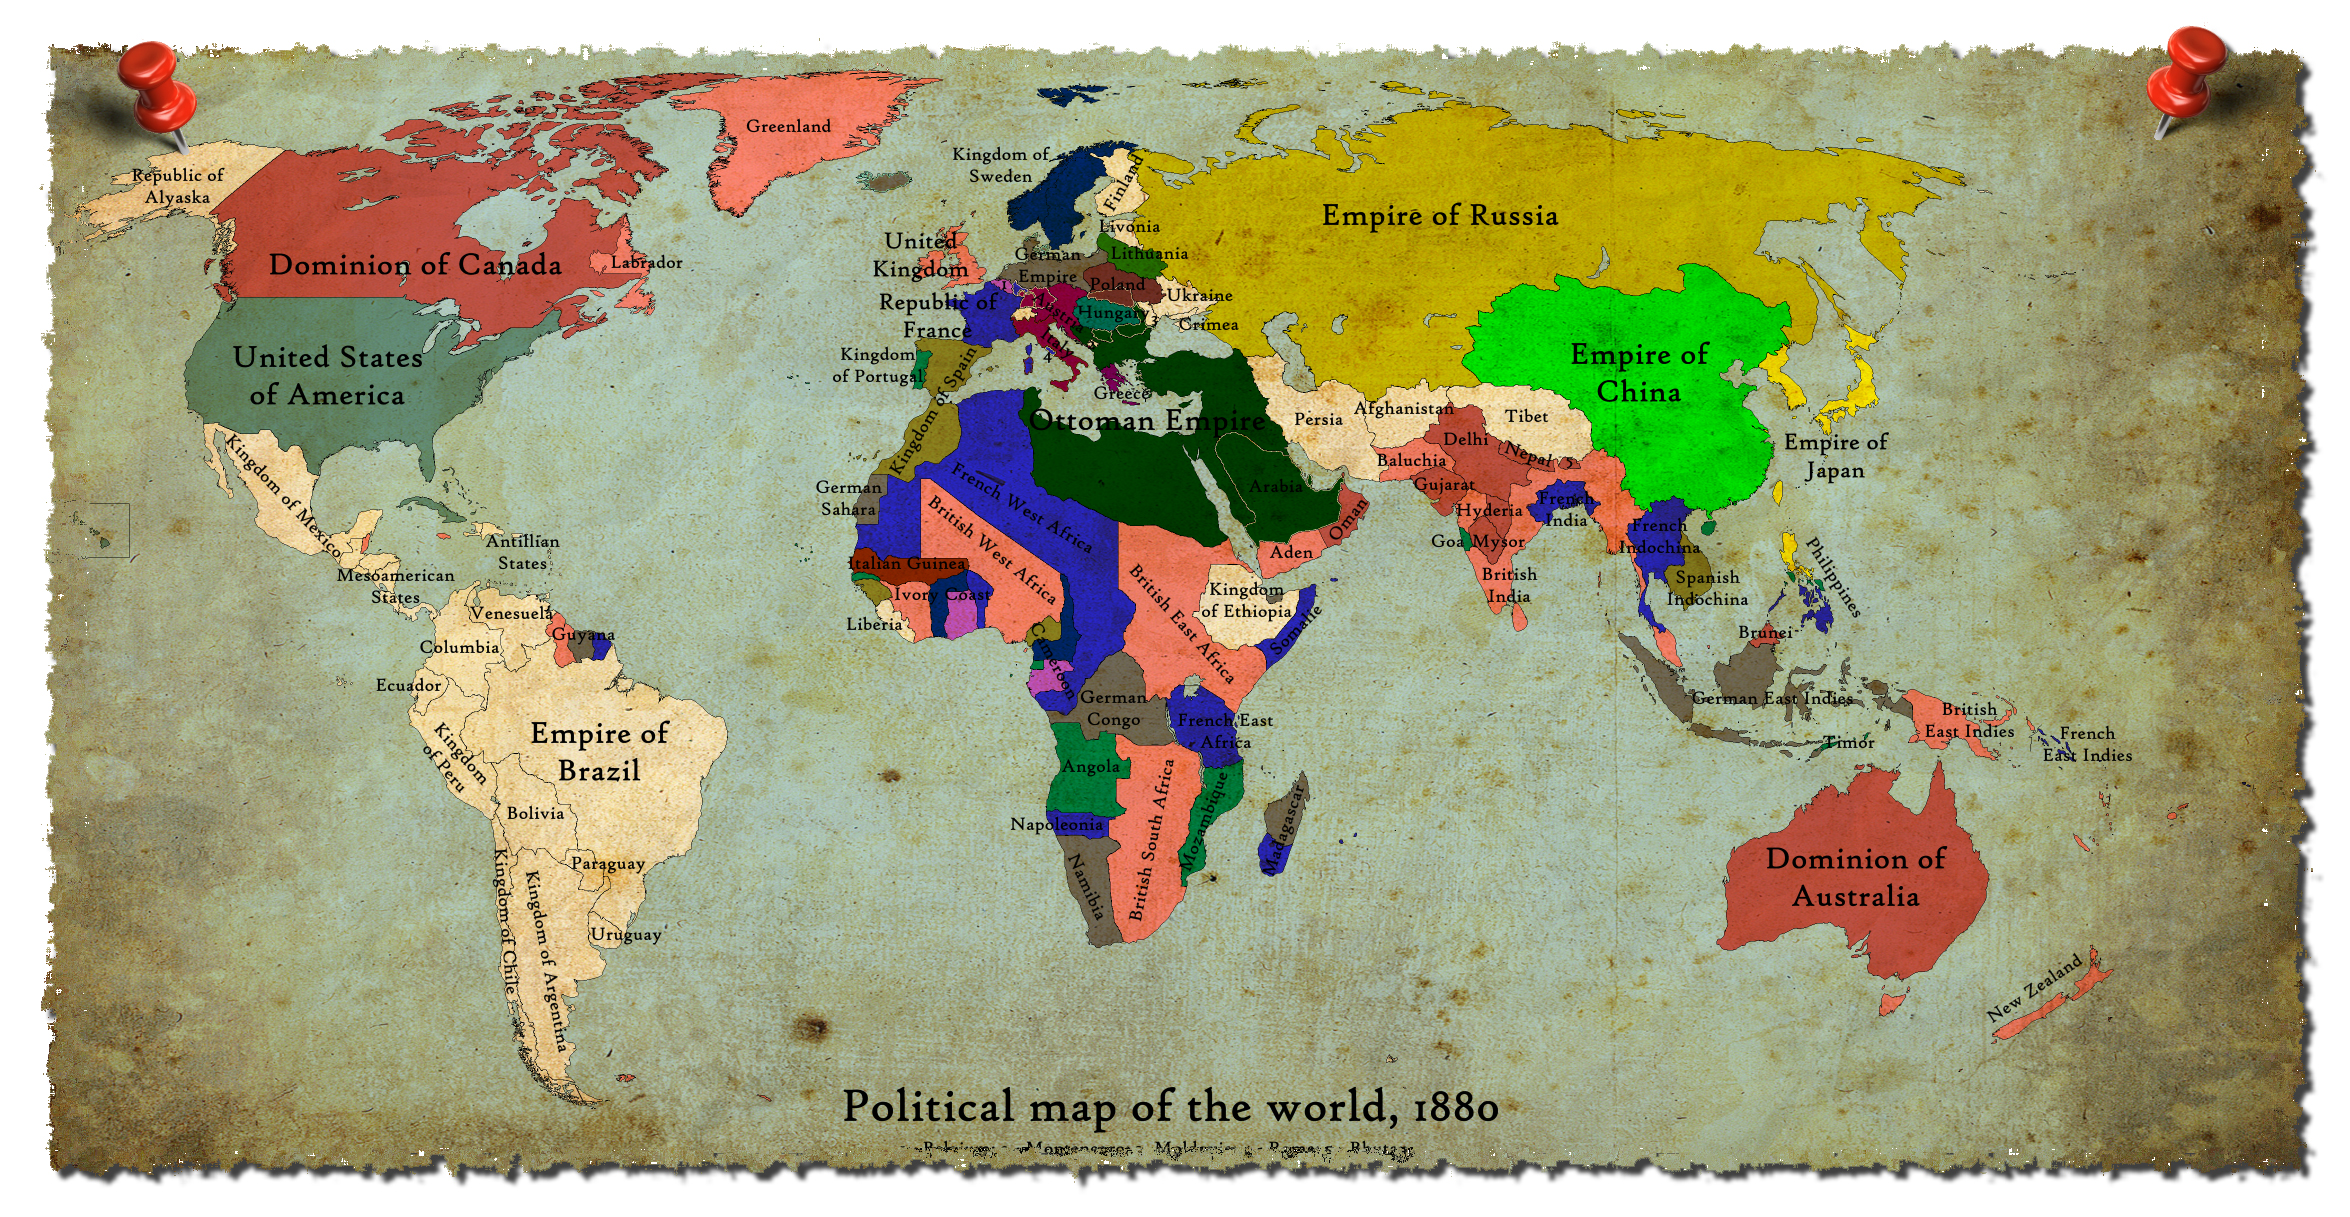 The world, 1880